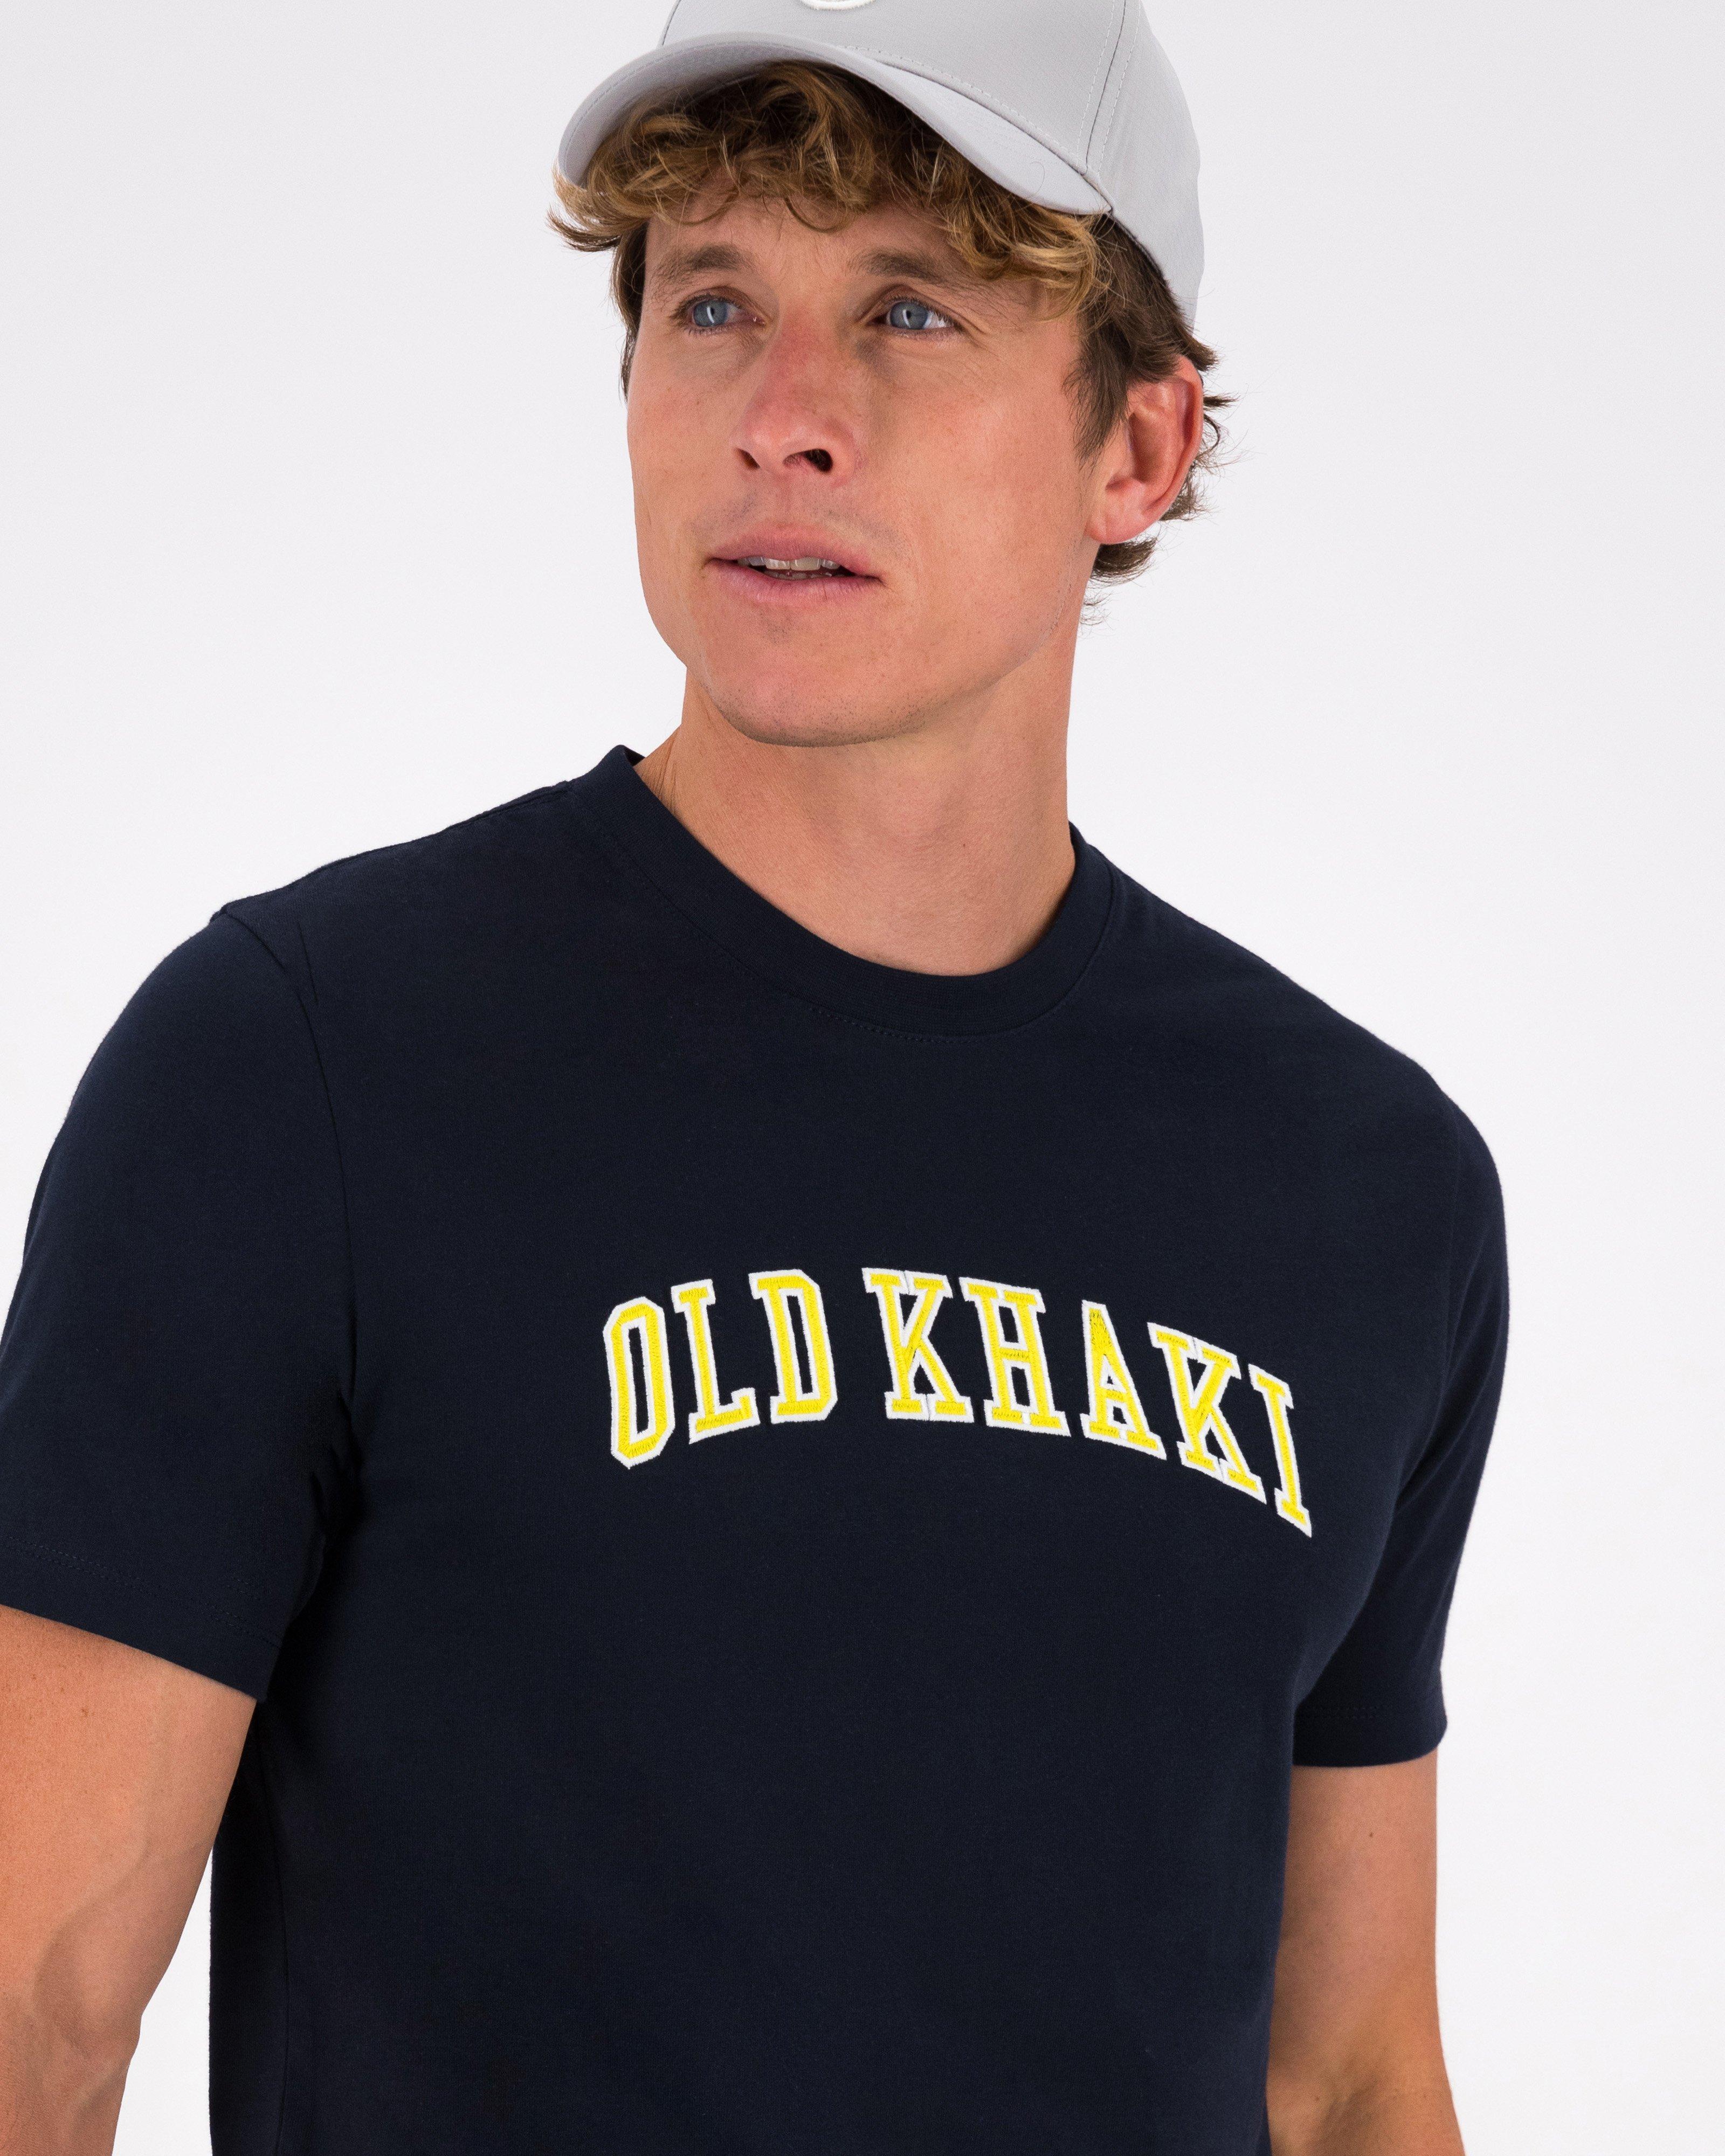 Old Khaki Men’s North Cotton T-shirt -  Navy